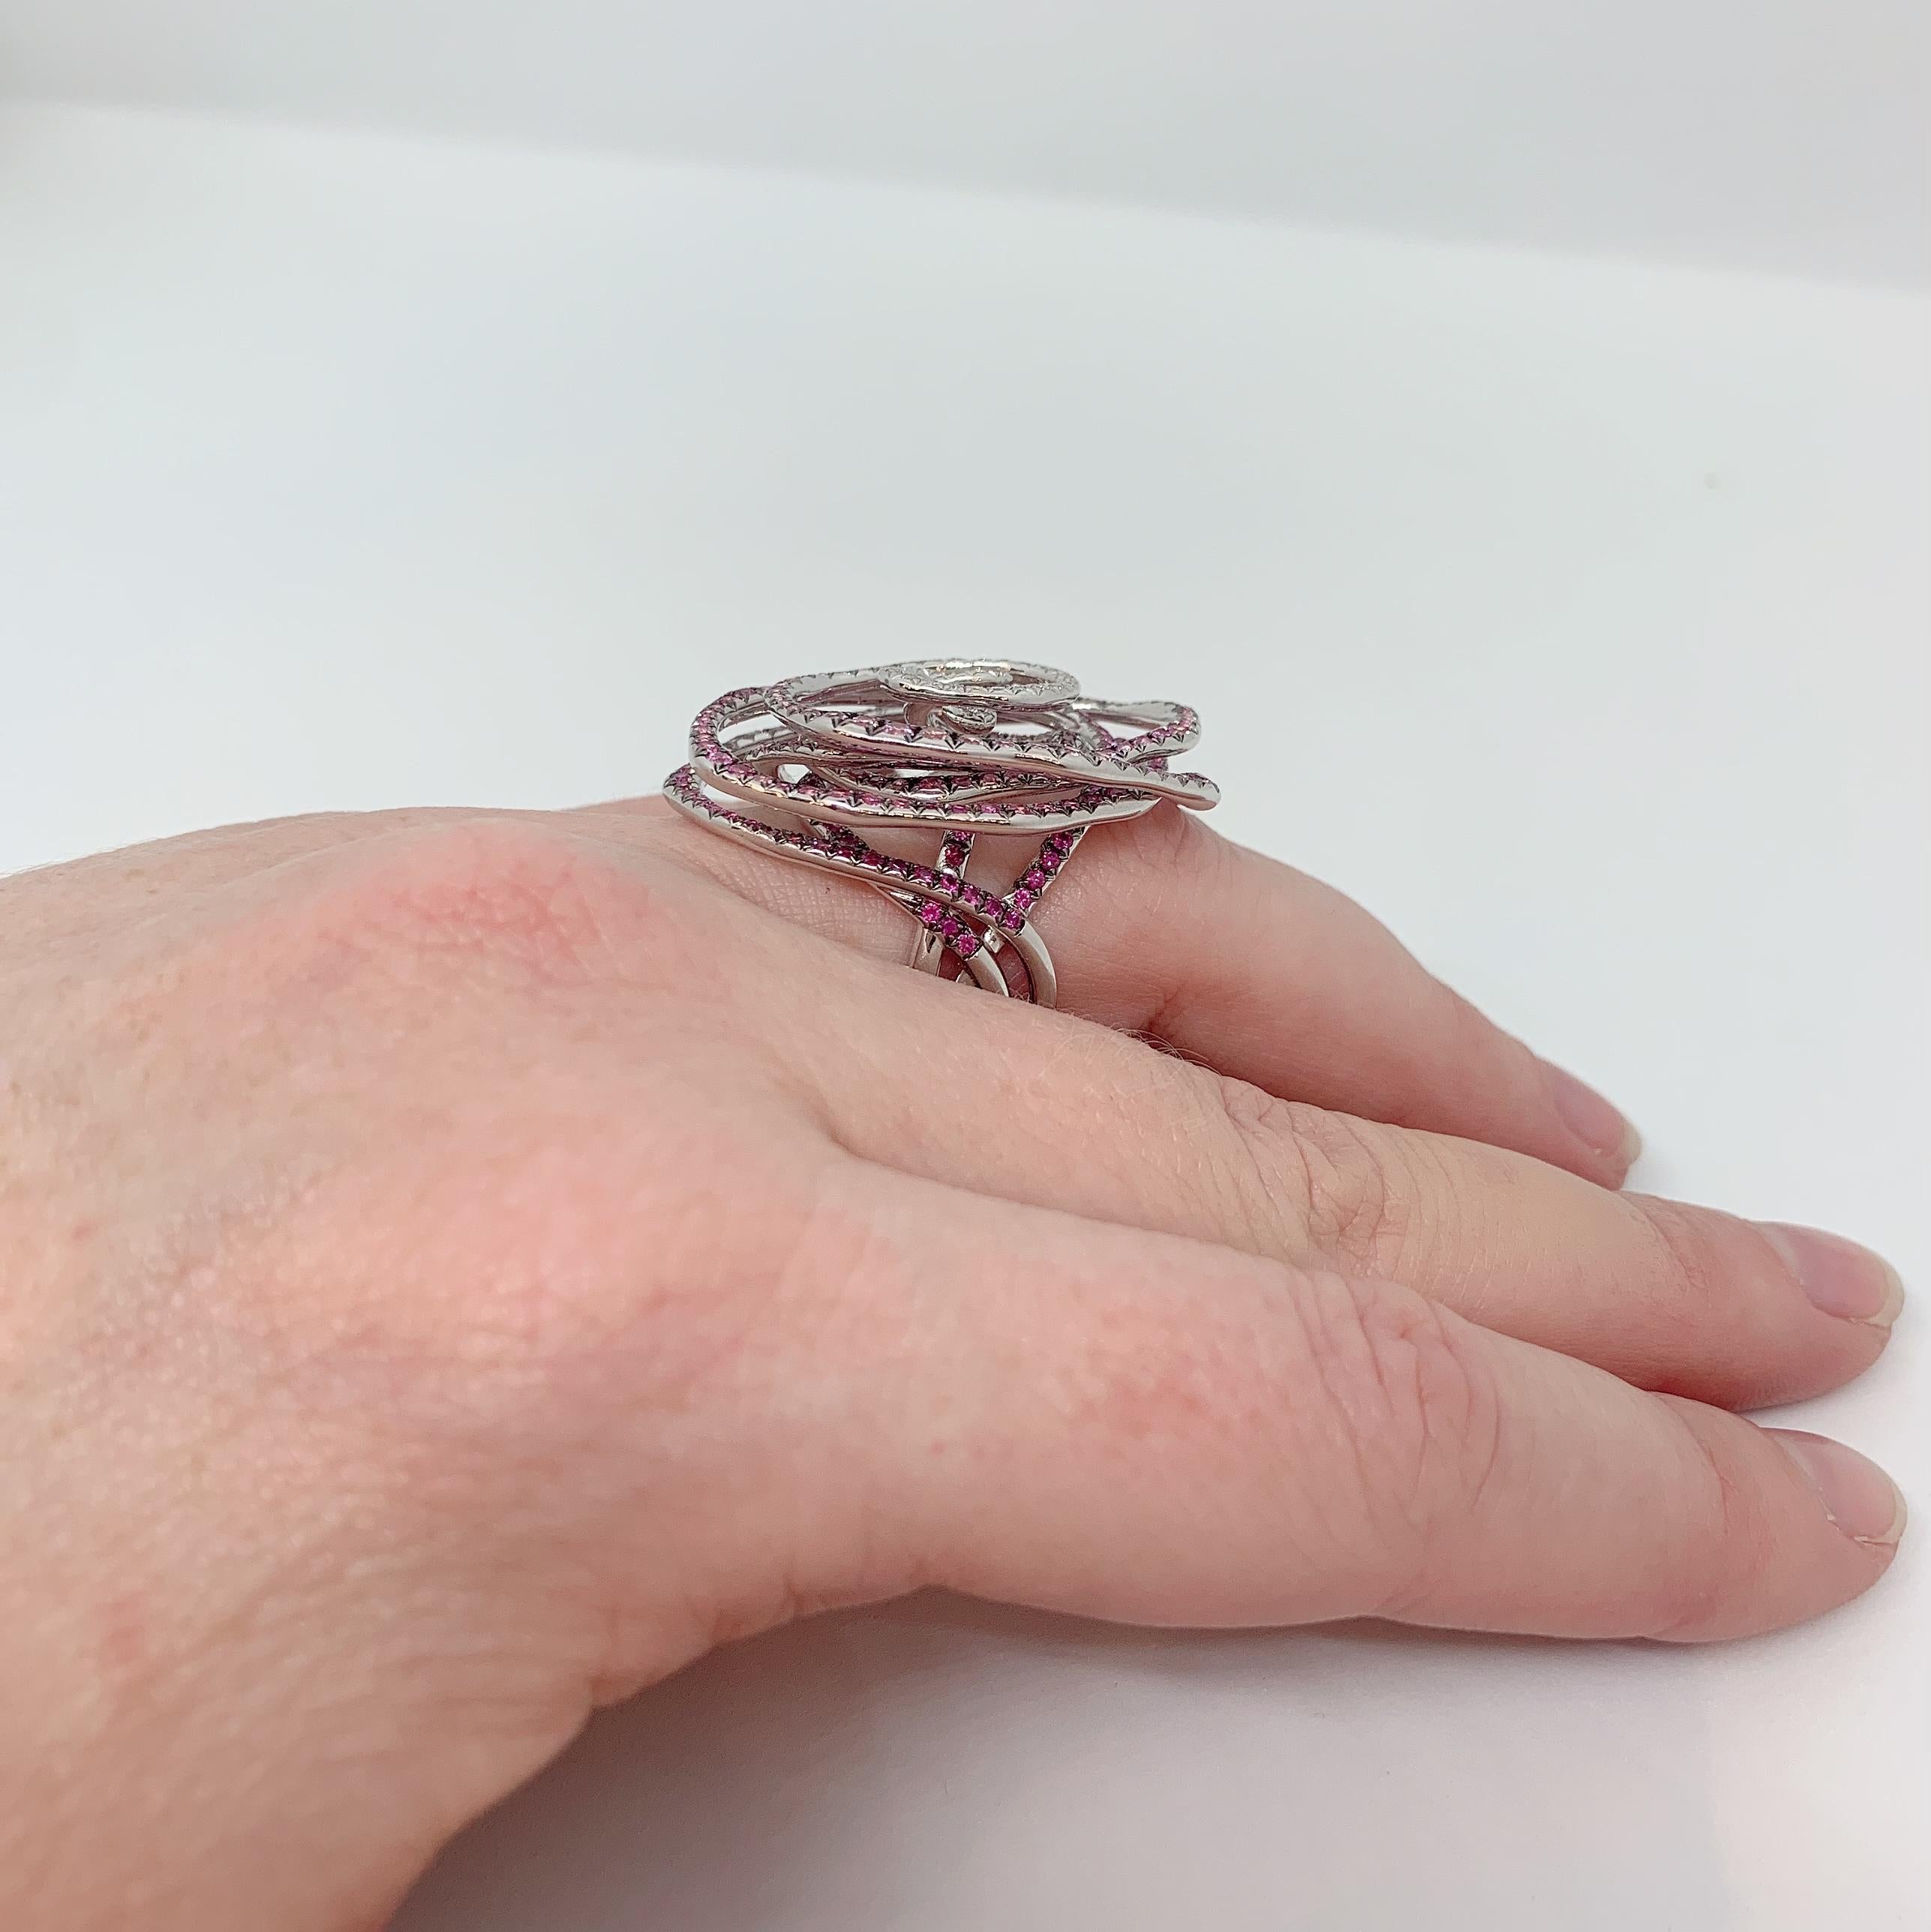 Women's Margot McKinney 18K Gold Swirl Ring Set with White Diamonds and Pink Sapphires